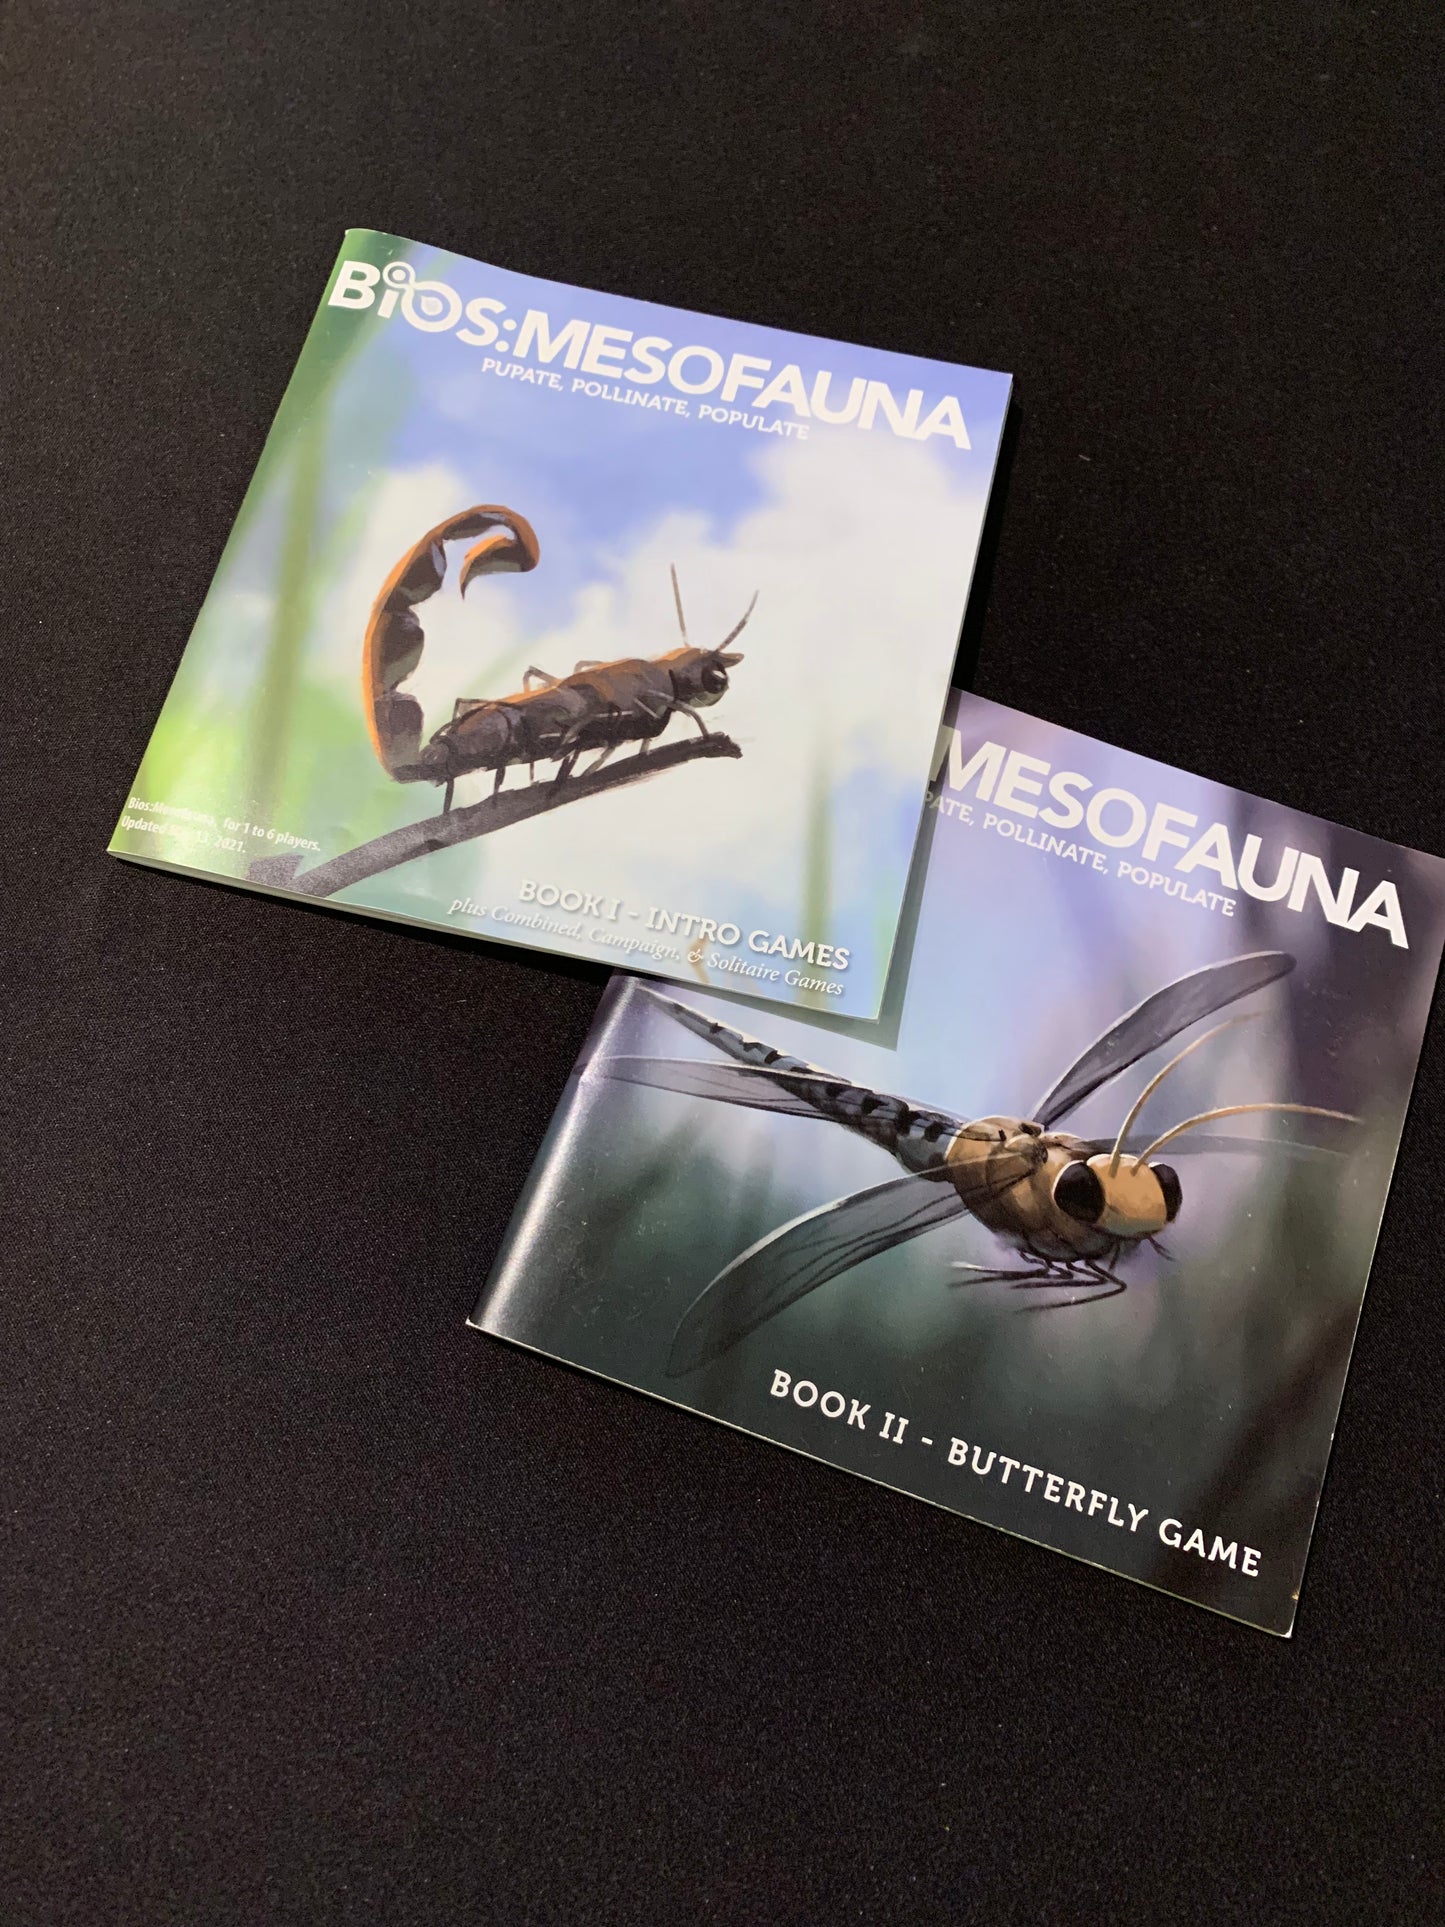 Bios: Mesofauna board game - Book ! and Book 2 gameplay booklets